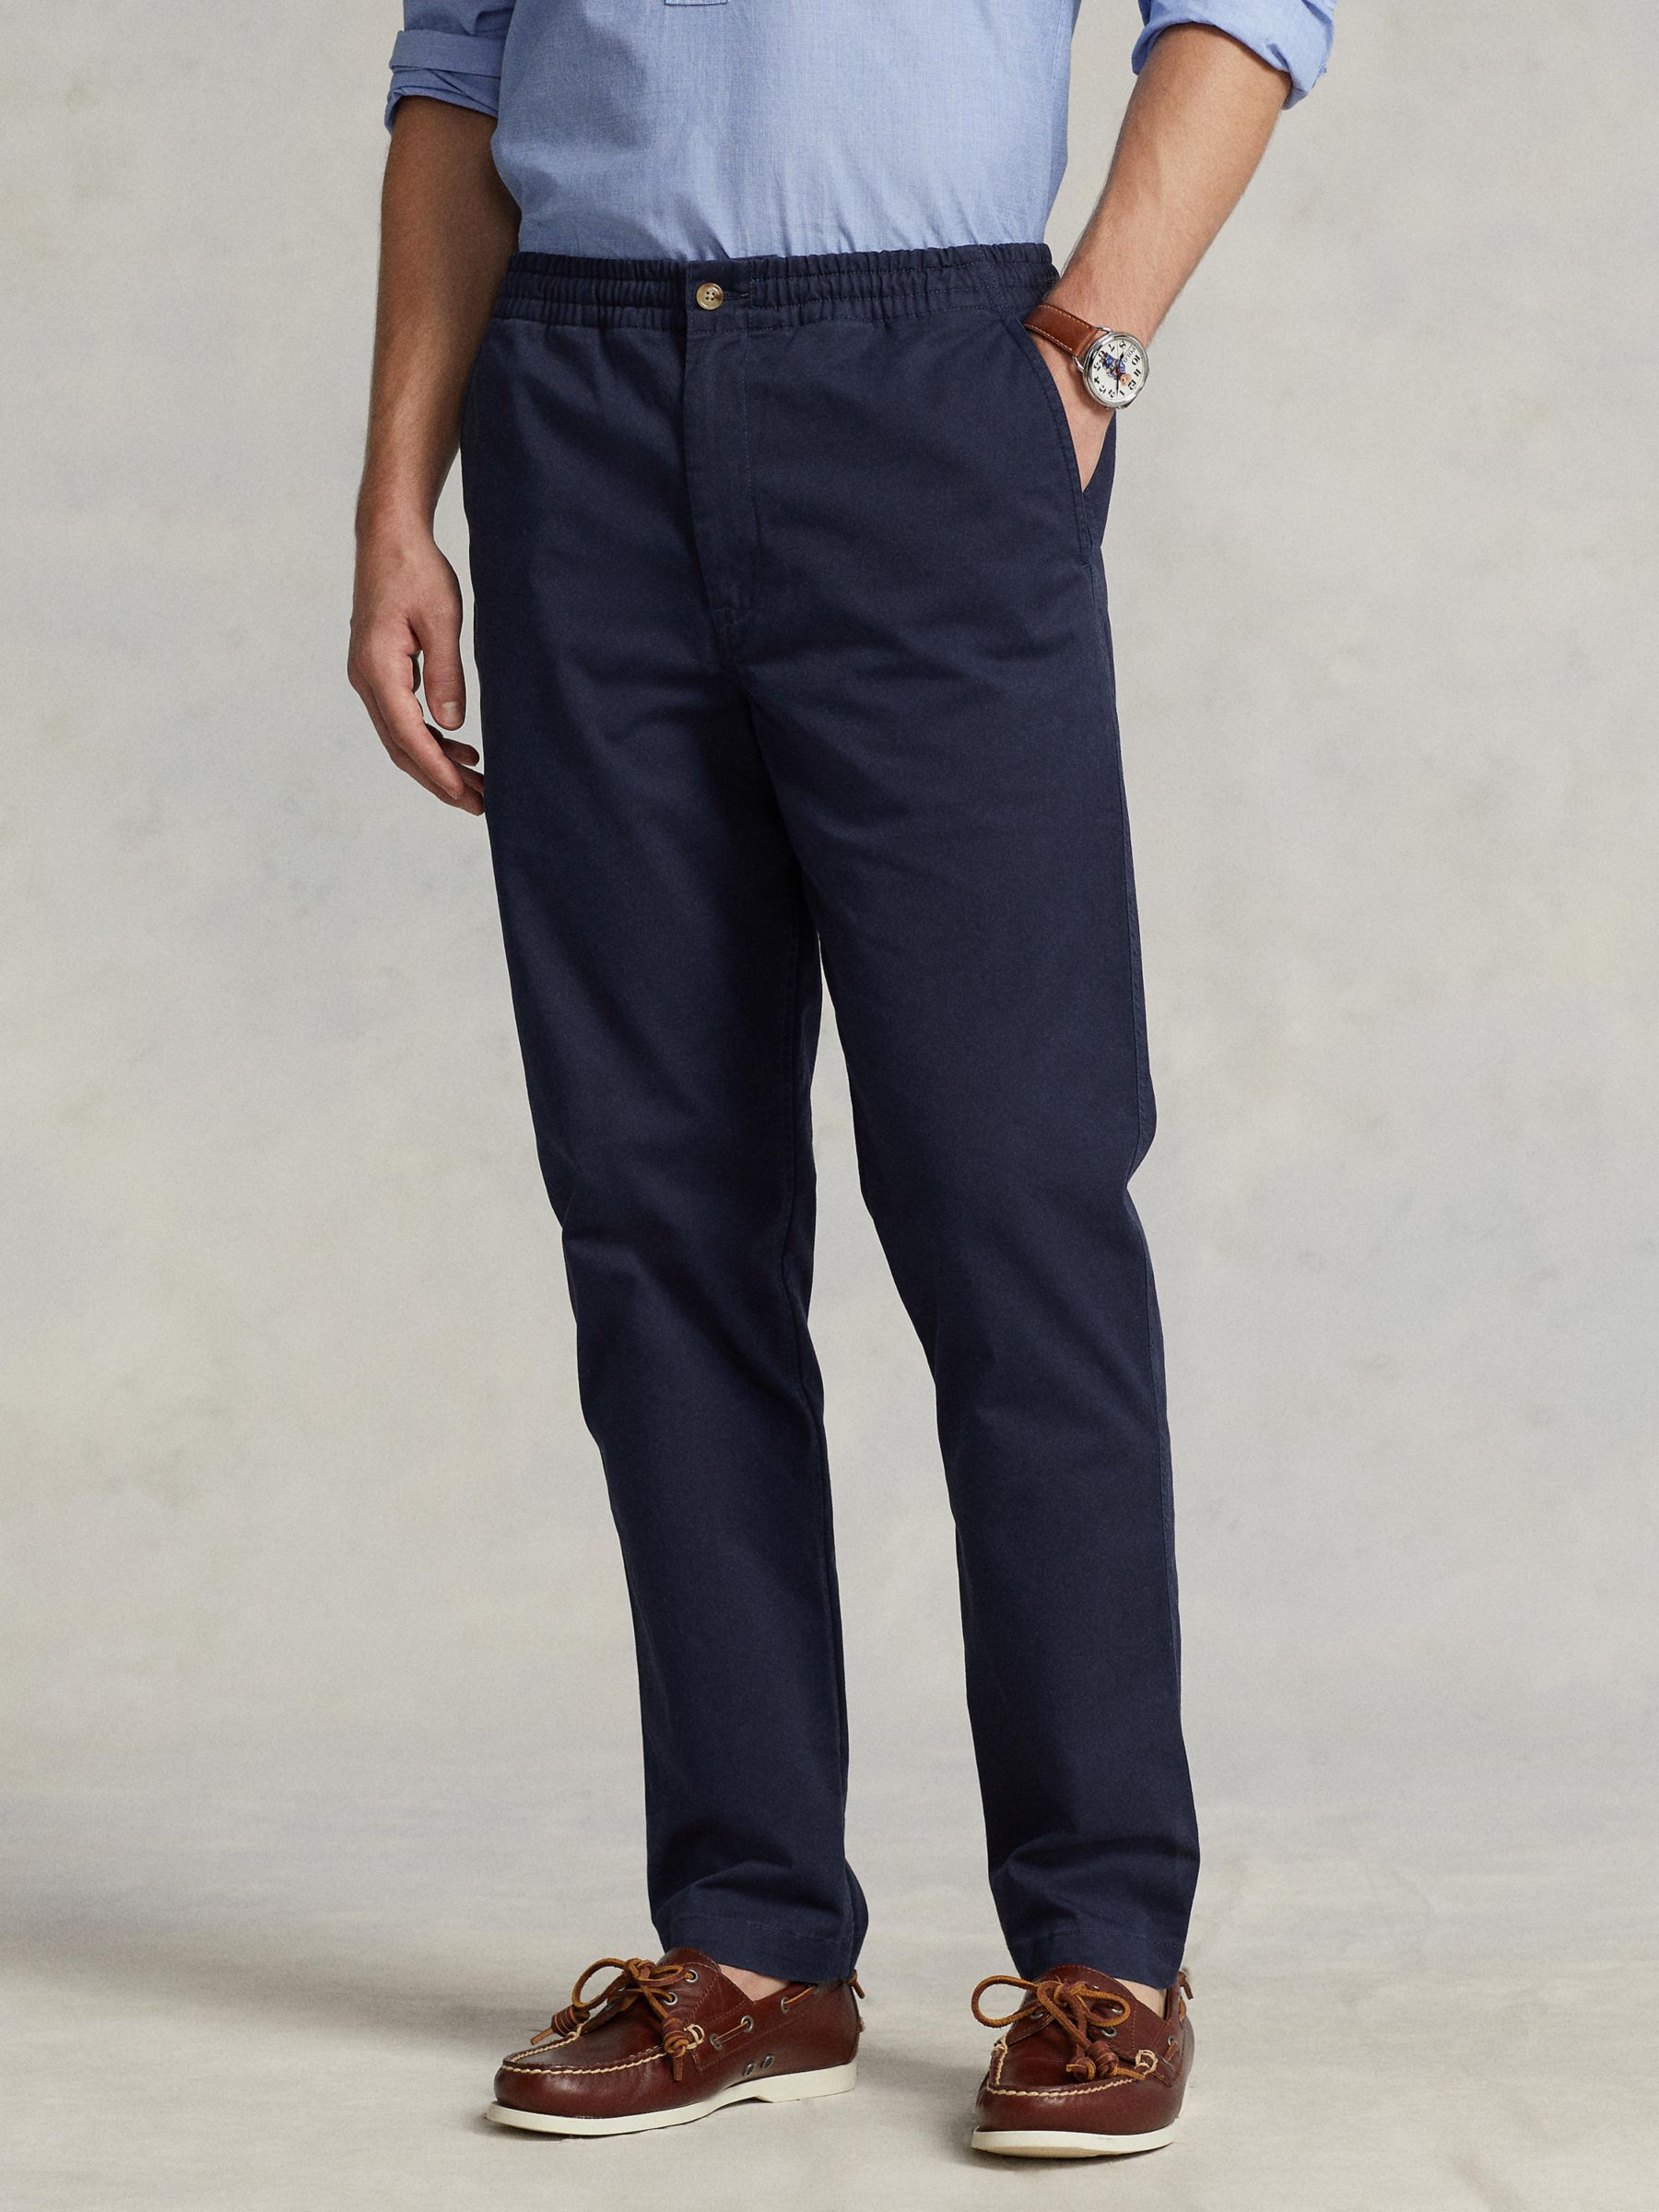 Polo Ralph Lauren TENNIS PANT FLAT FRONT - Trousers - newport navy